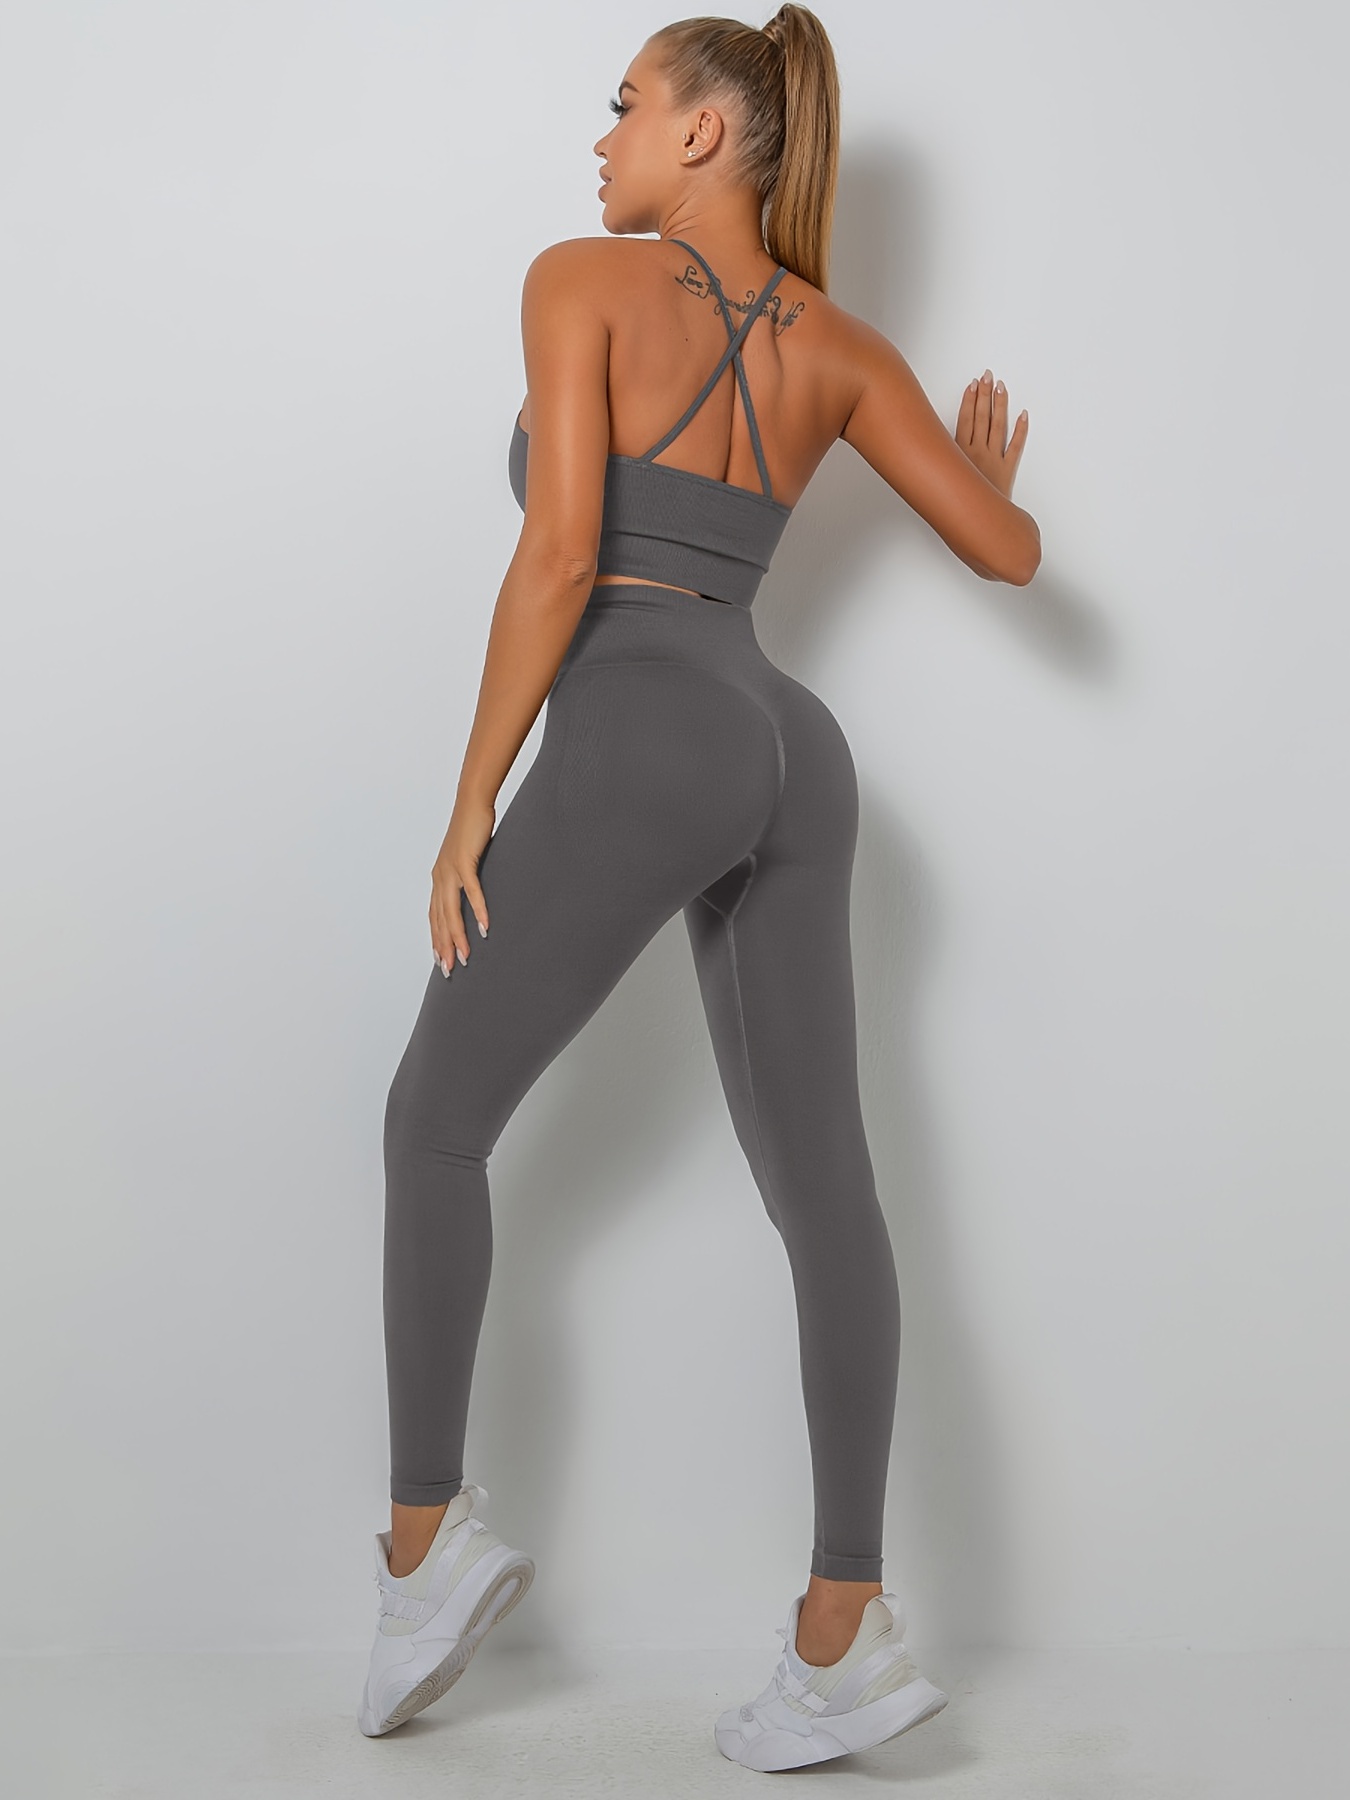 Latest Street Fashion Women's X Cross Net Gym Yoga Sports legging Tights  Pants